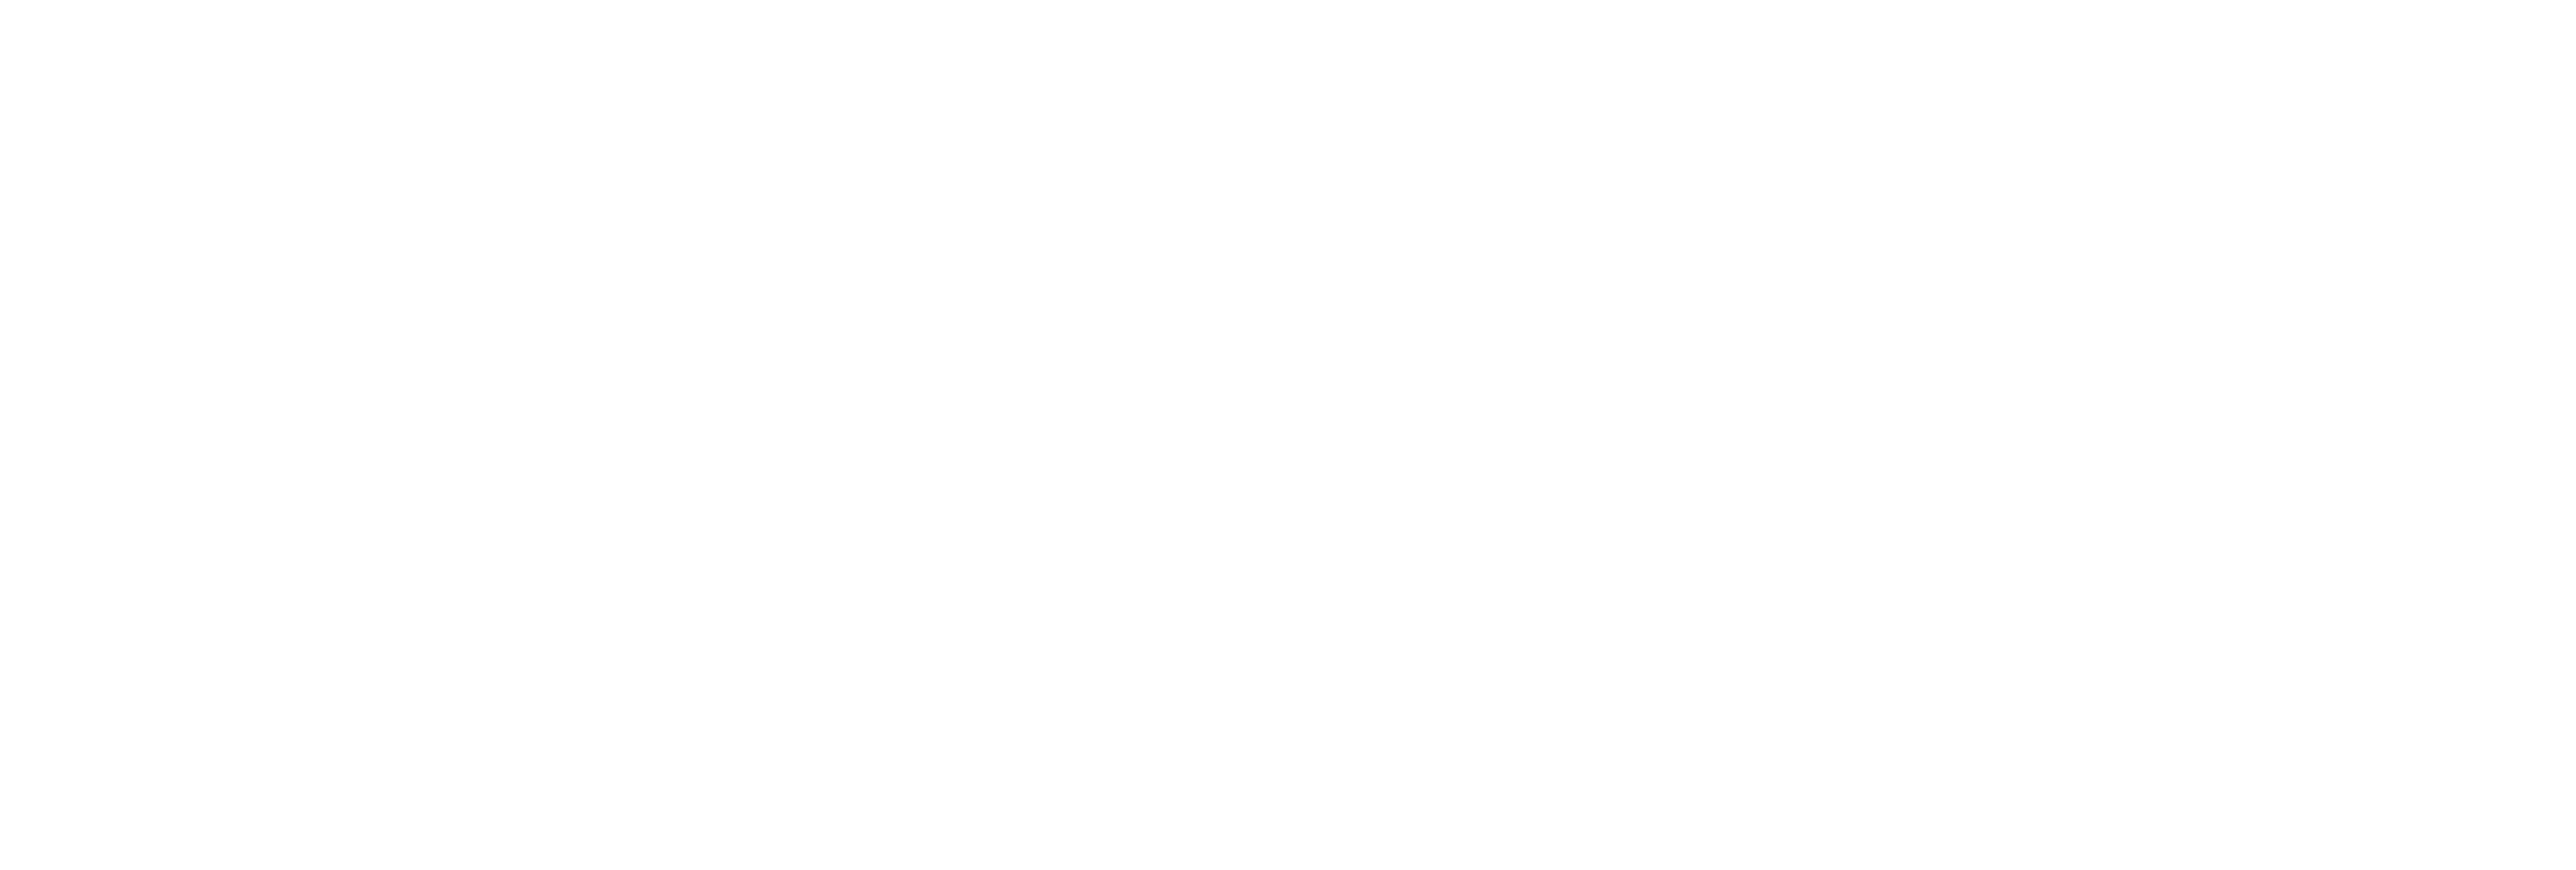 AniCura Dierenartsenpraktijk Herckenrode te Halen logo